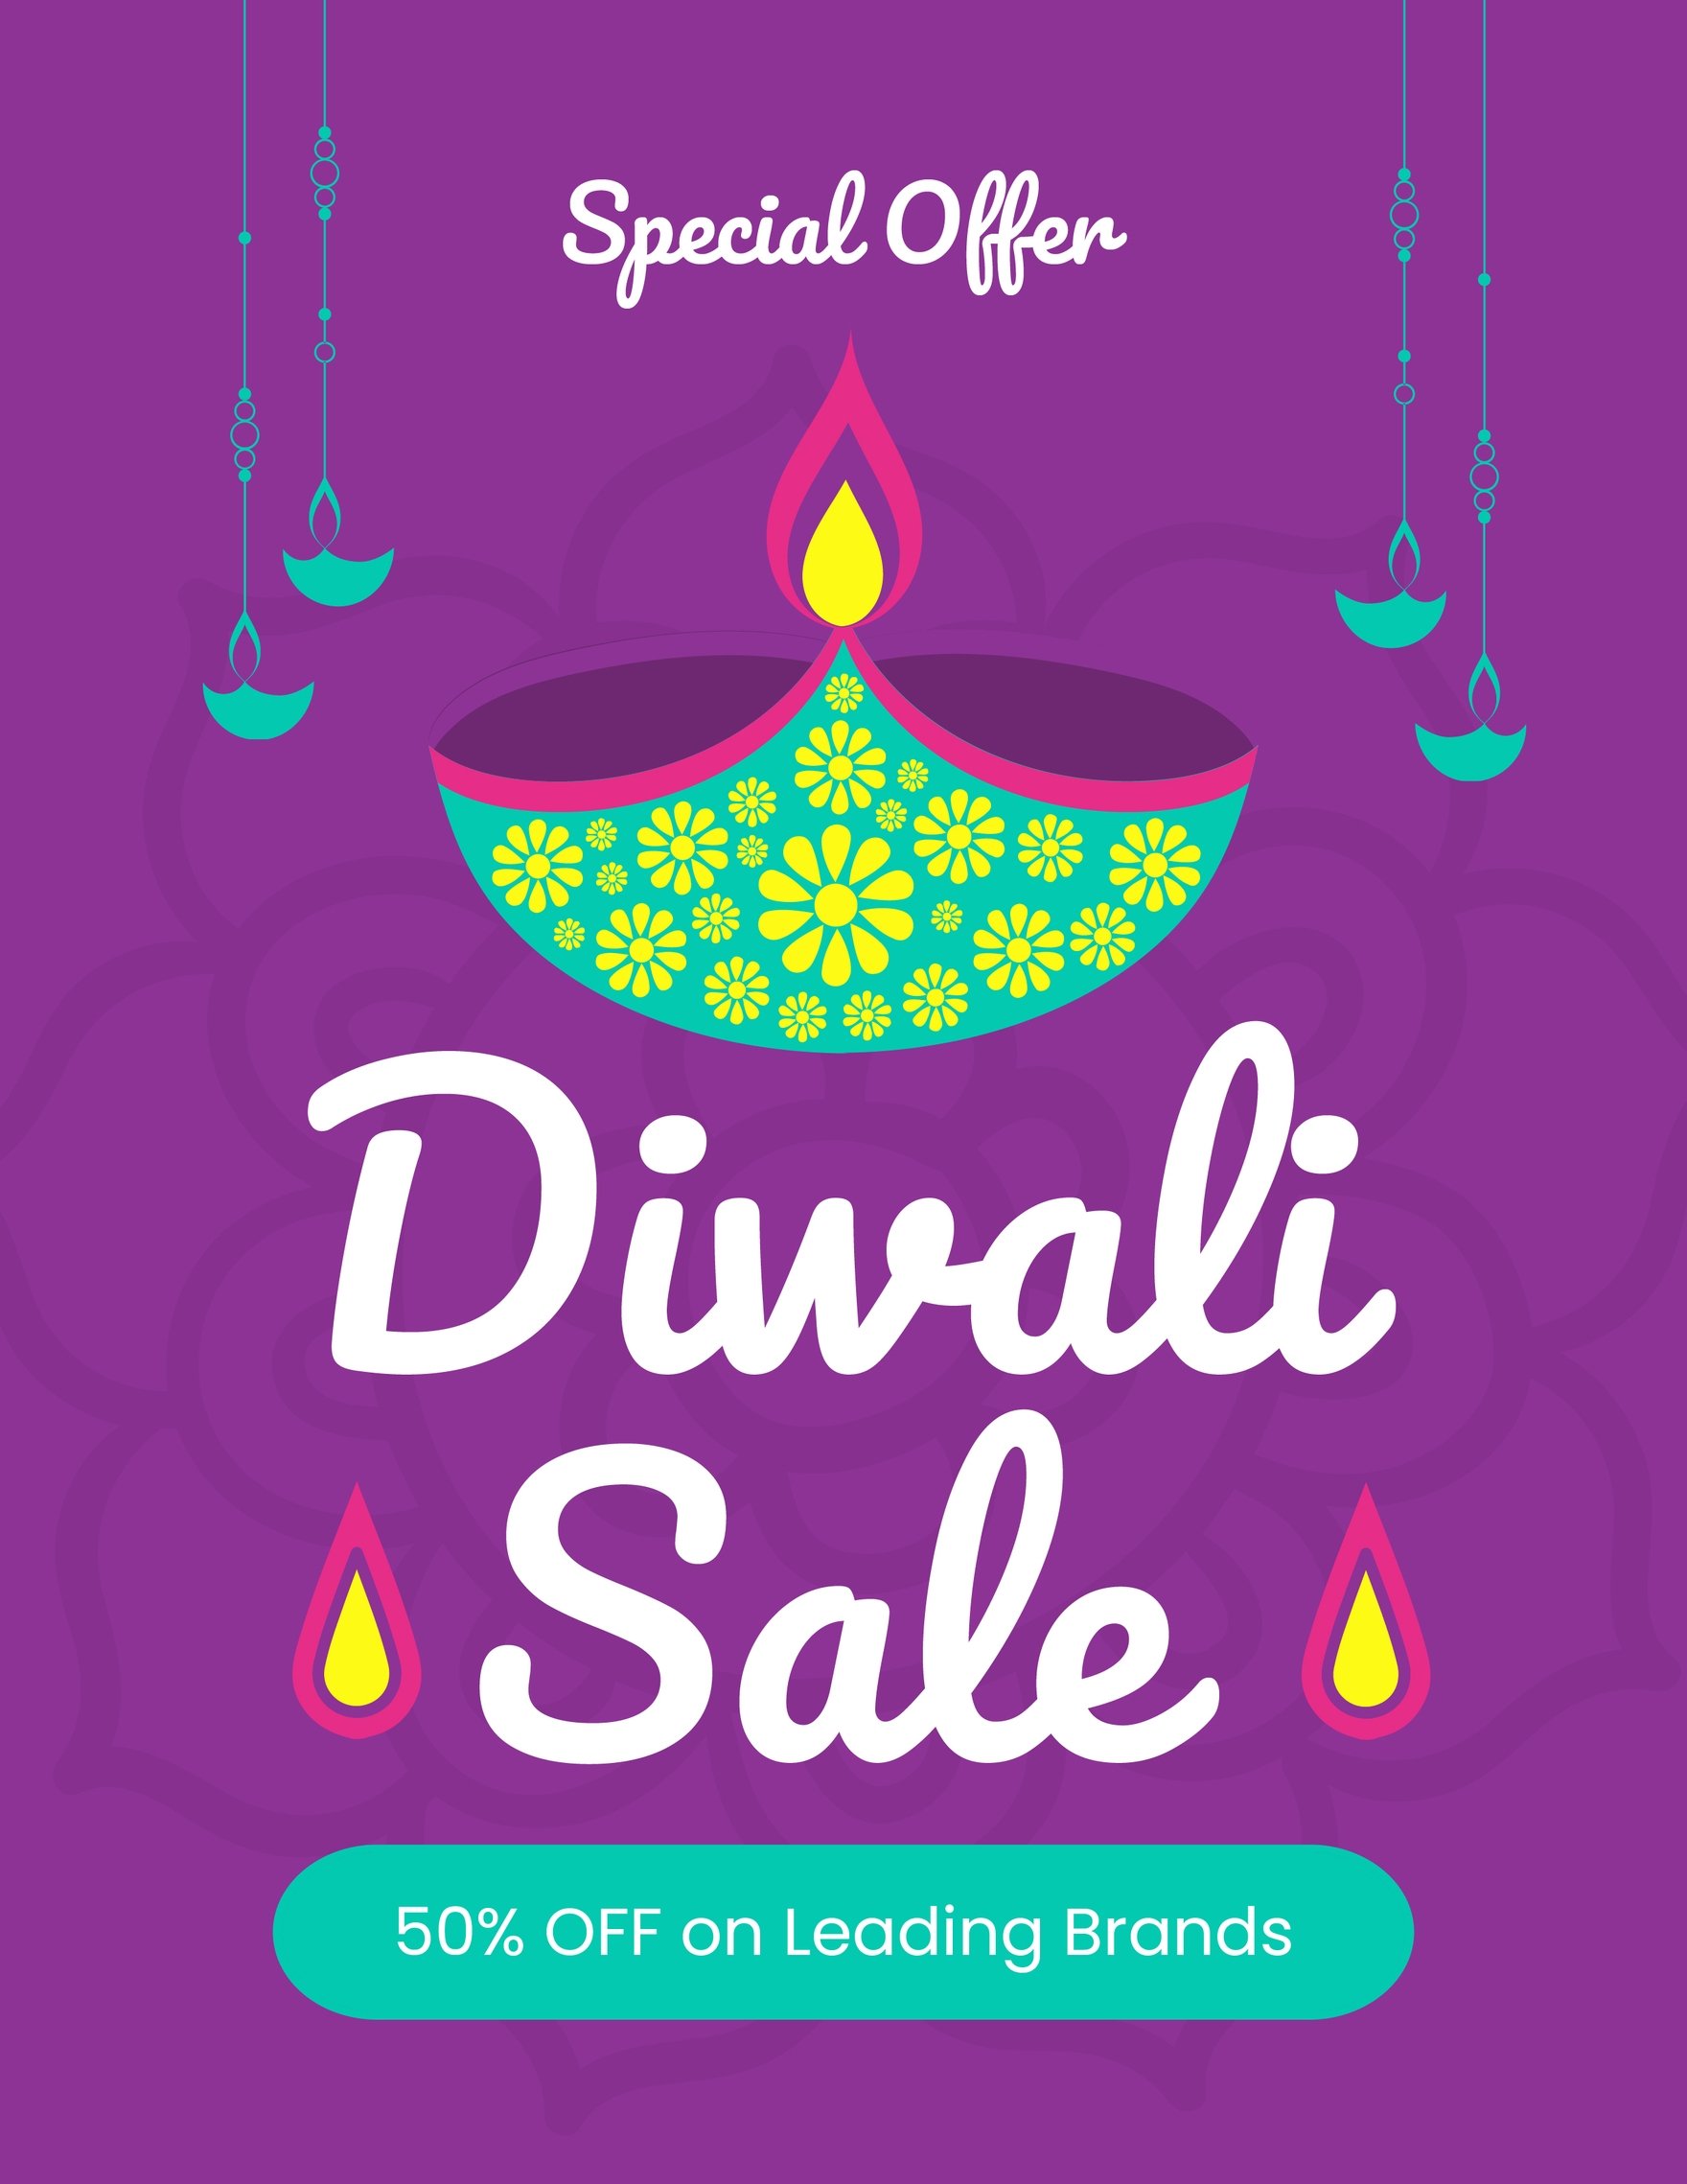 Free Diwali Advertising Flyer in Word, Google Docs, Illustrator, PSD, Apple Pages, Publisher, EPS, SVG, JPG, PNG